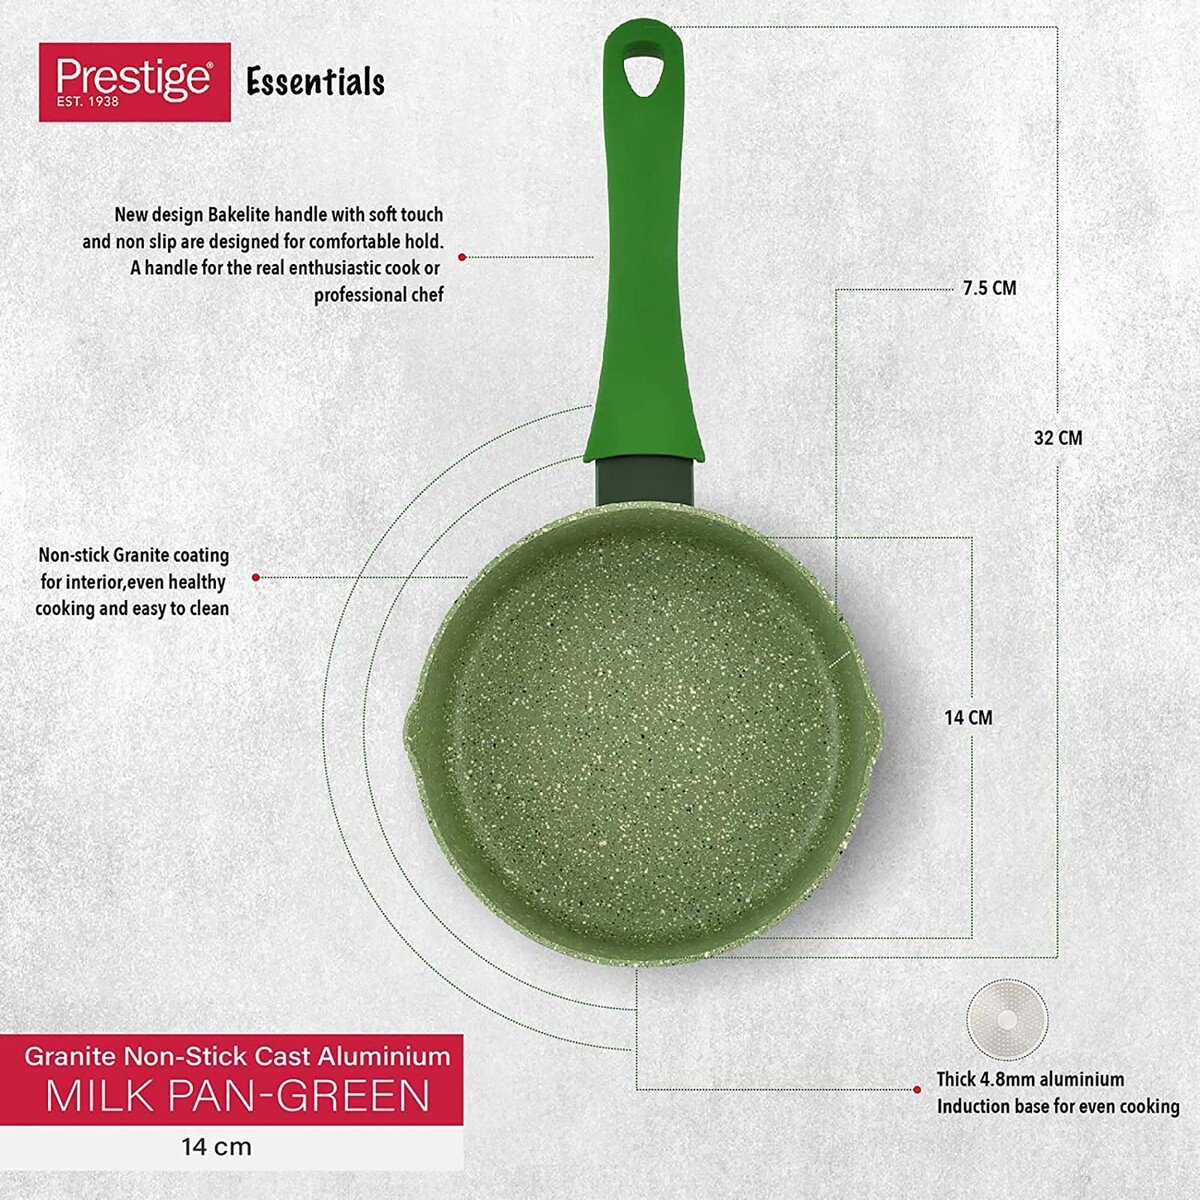 Prestige Granite Non-Stick Cast Aluminium Milk Pan, 14 cm, Green, PR81120